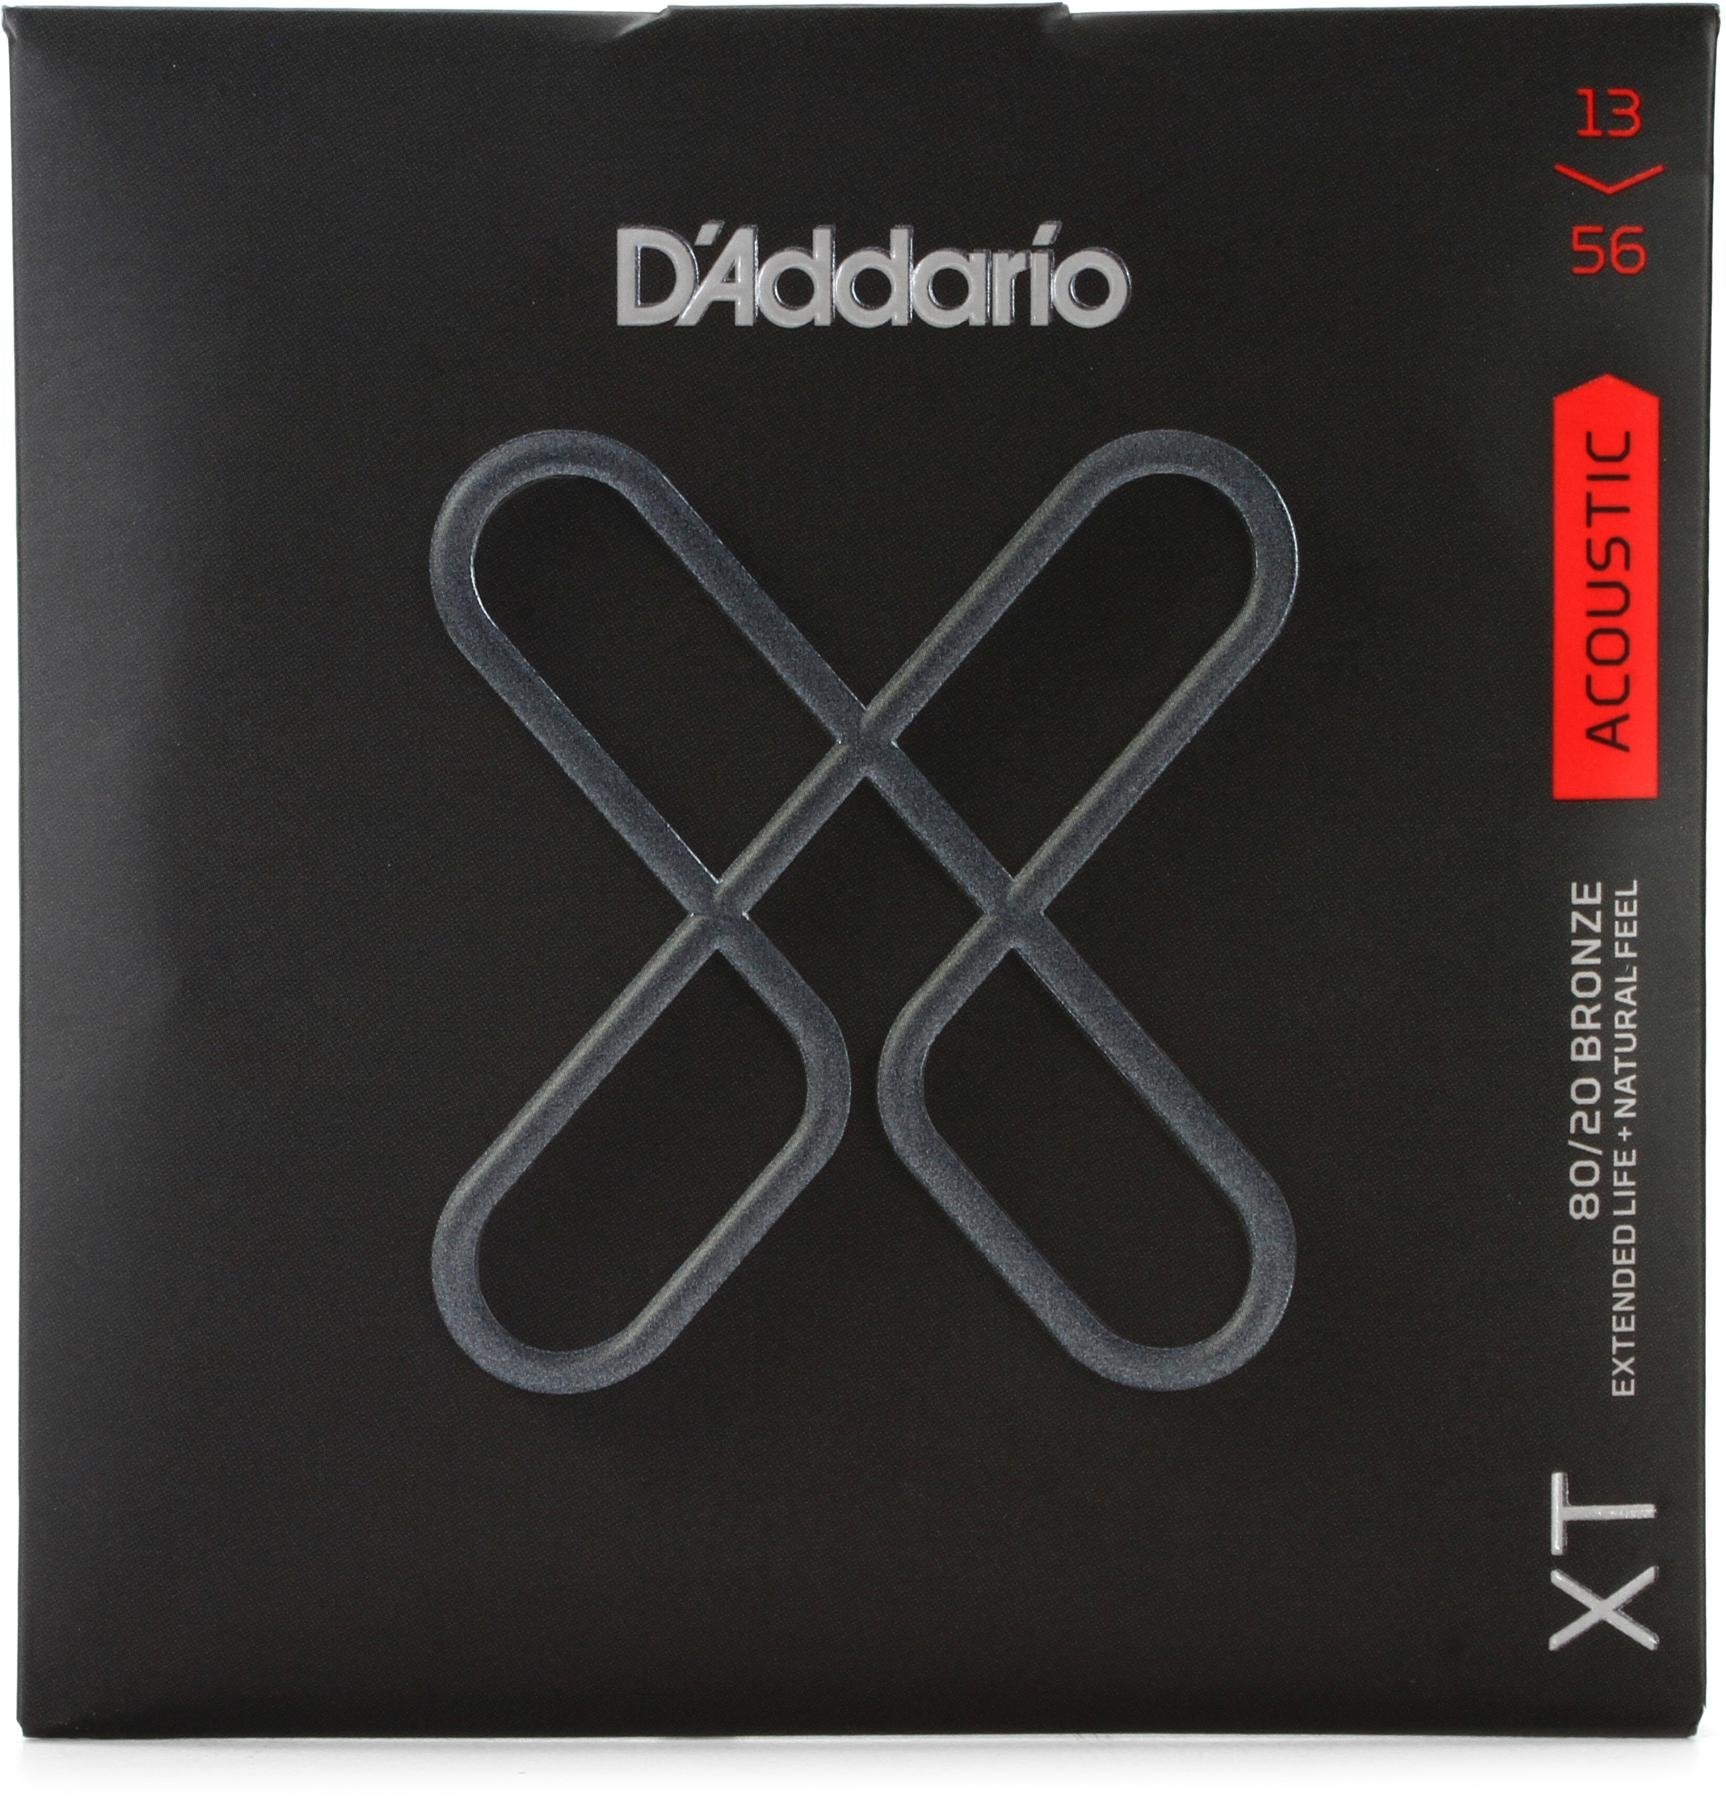 D'Addario XTABR1356, XT Acoustic 80/20 Bronze, Medium, 13-56